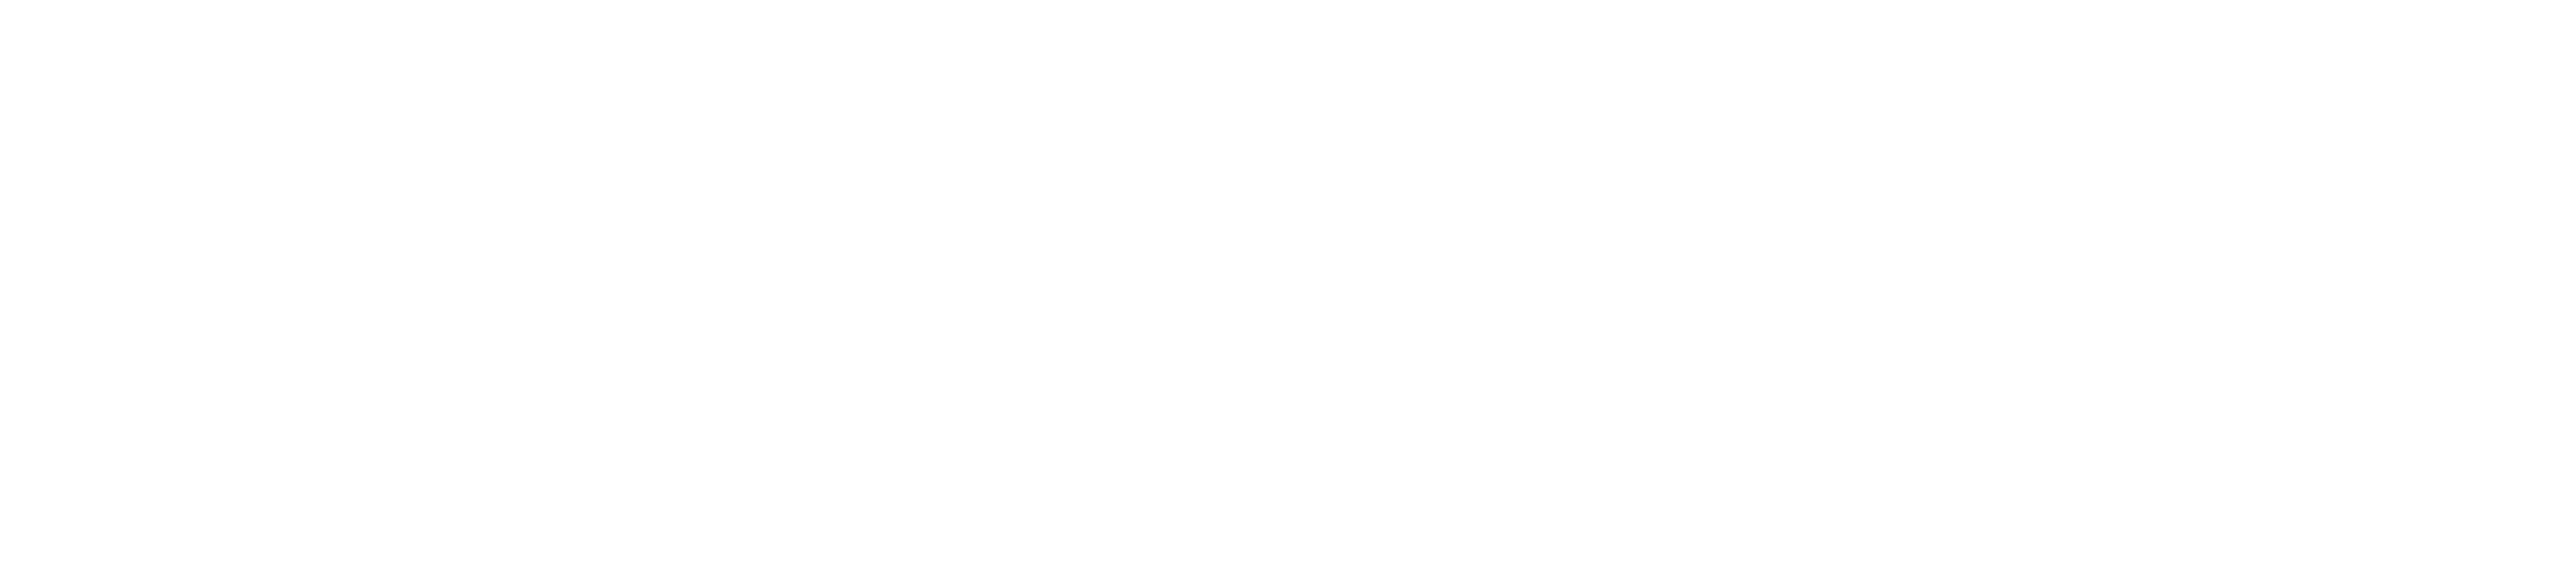 WRNA Women's Risk Needs Assessment